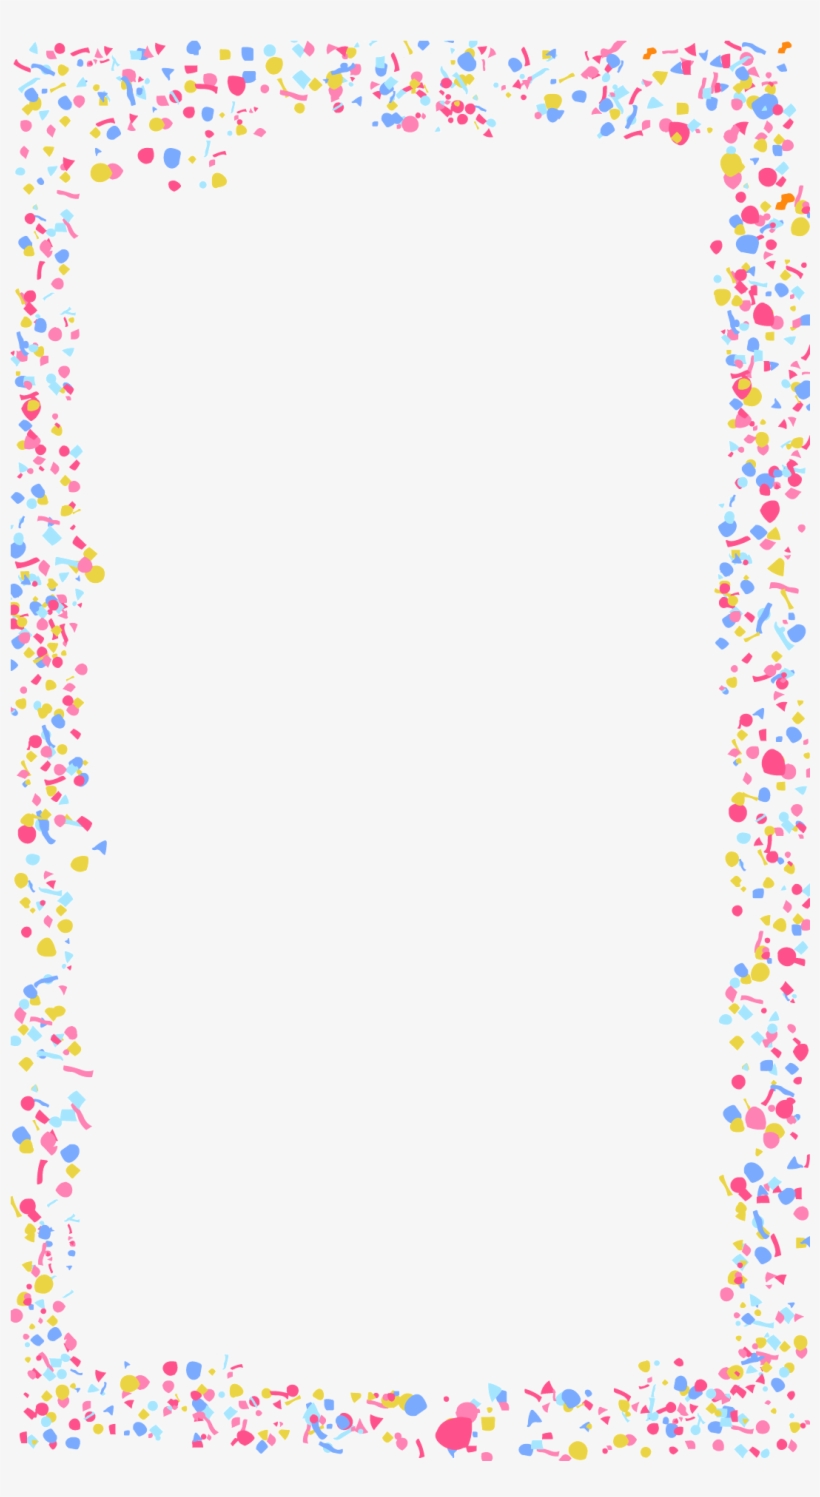 Sc Melissa's Bachelorette May 18-20 - Snapchat Filter Confetti Border, transparent png #56549